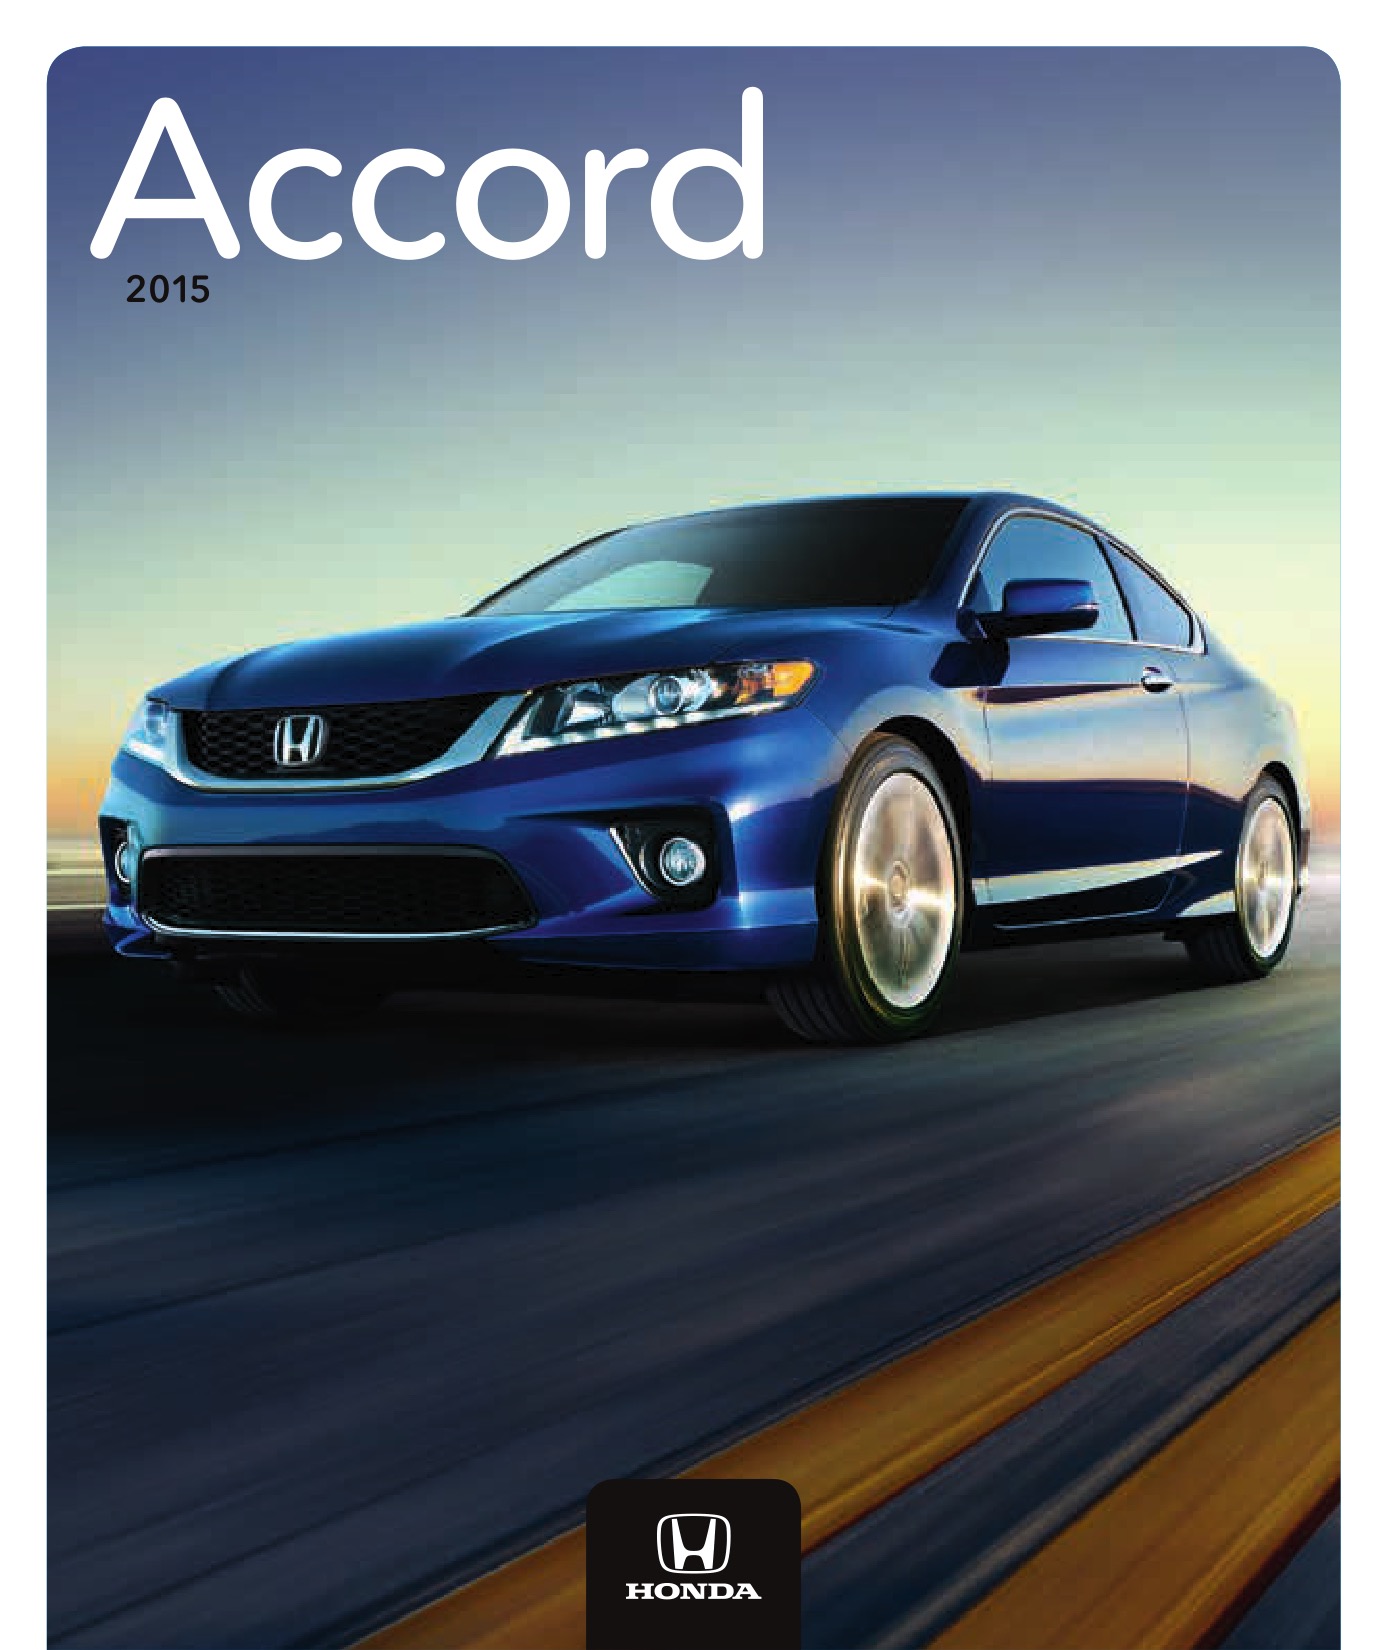 2015 Honda Accord Brochure